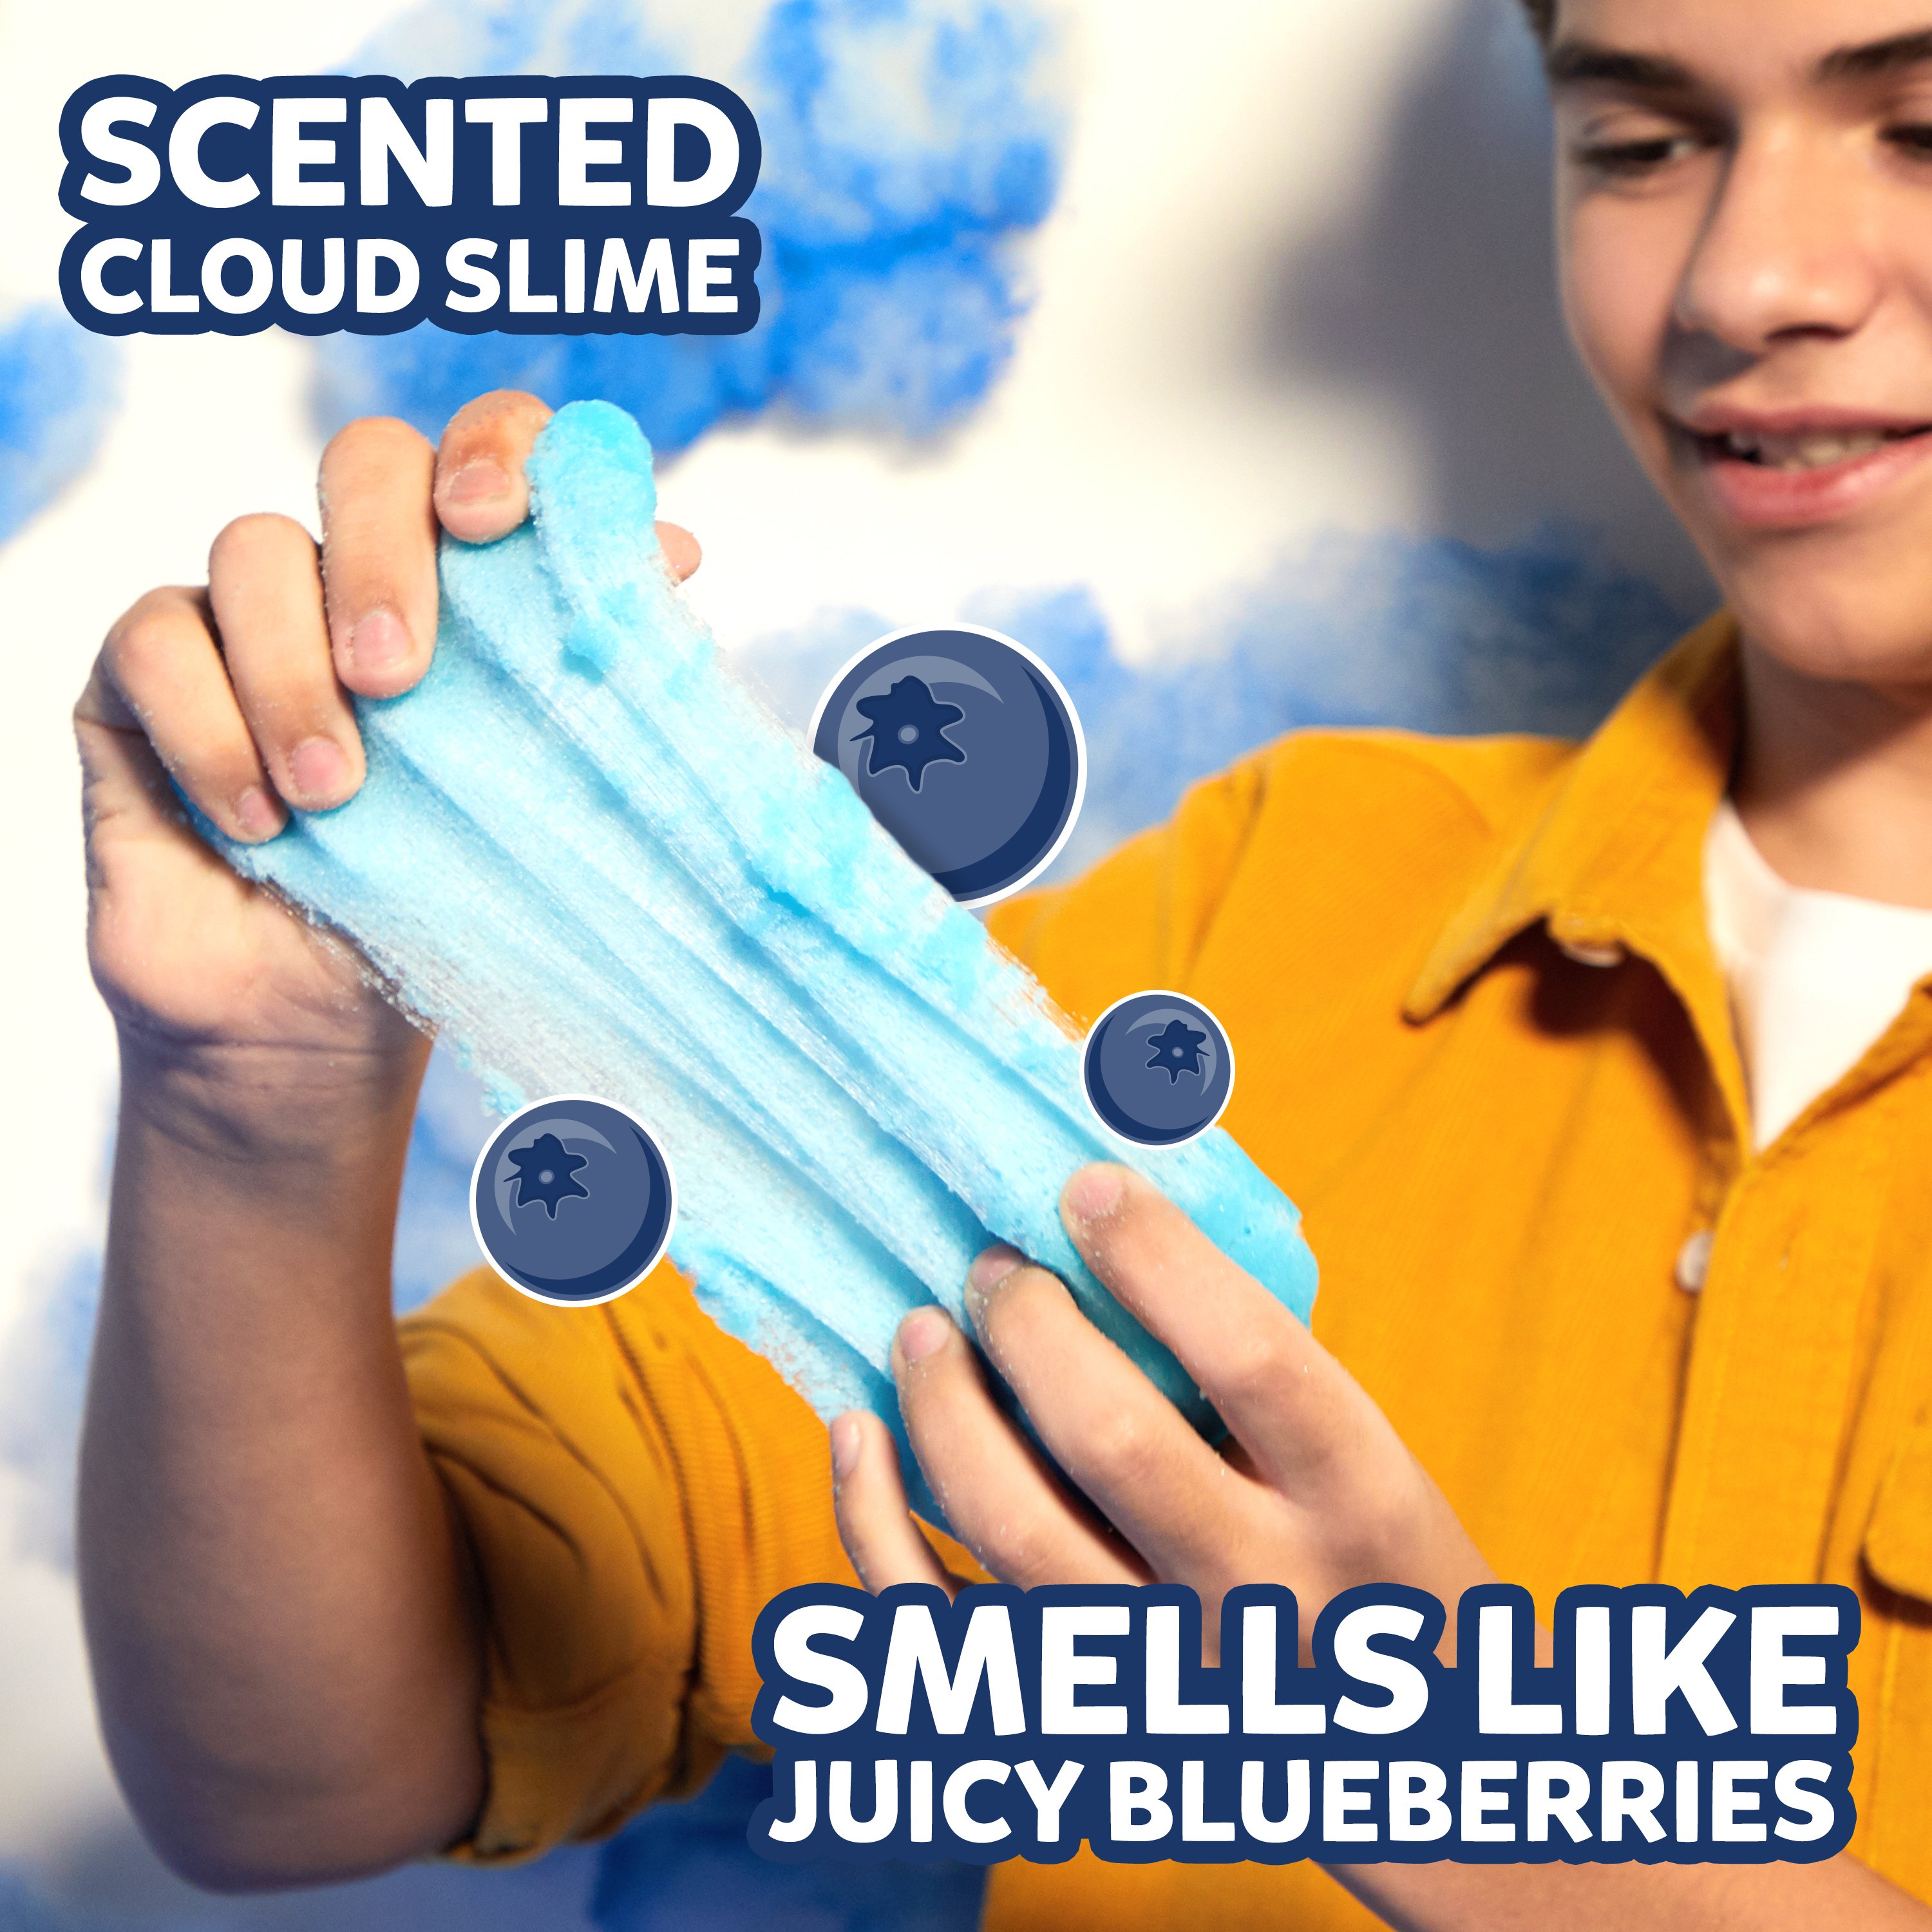 Elmer's Gue, Blueberry Cloud - 8 fl oz